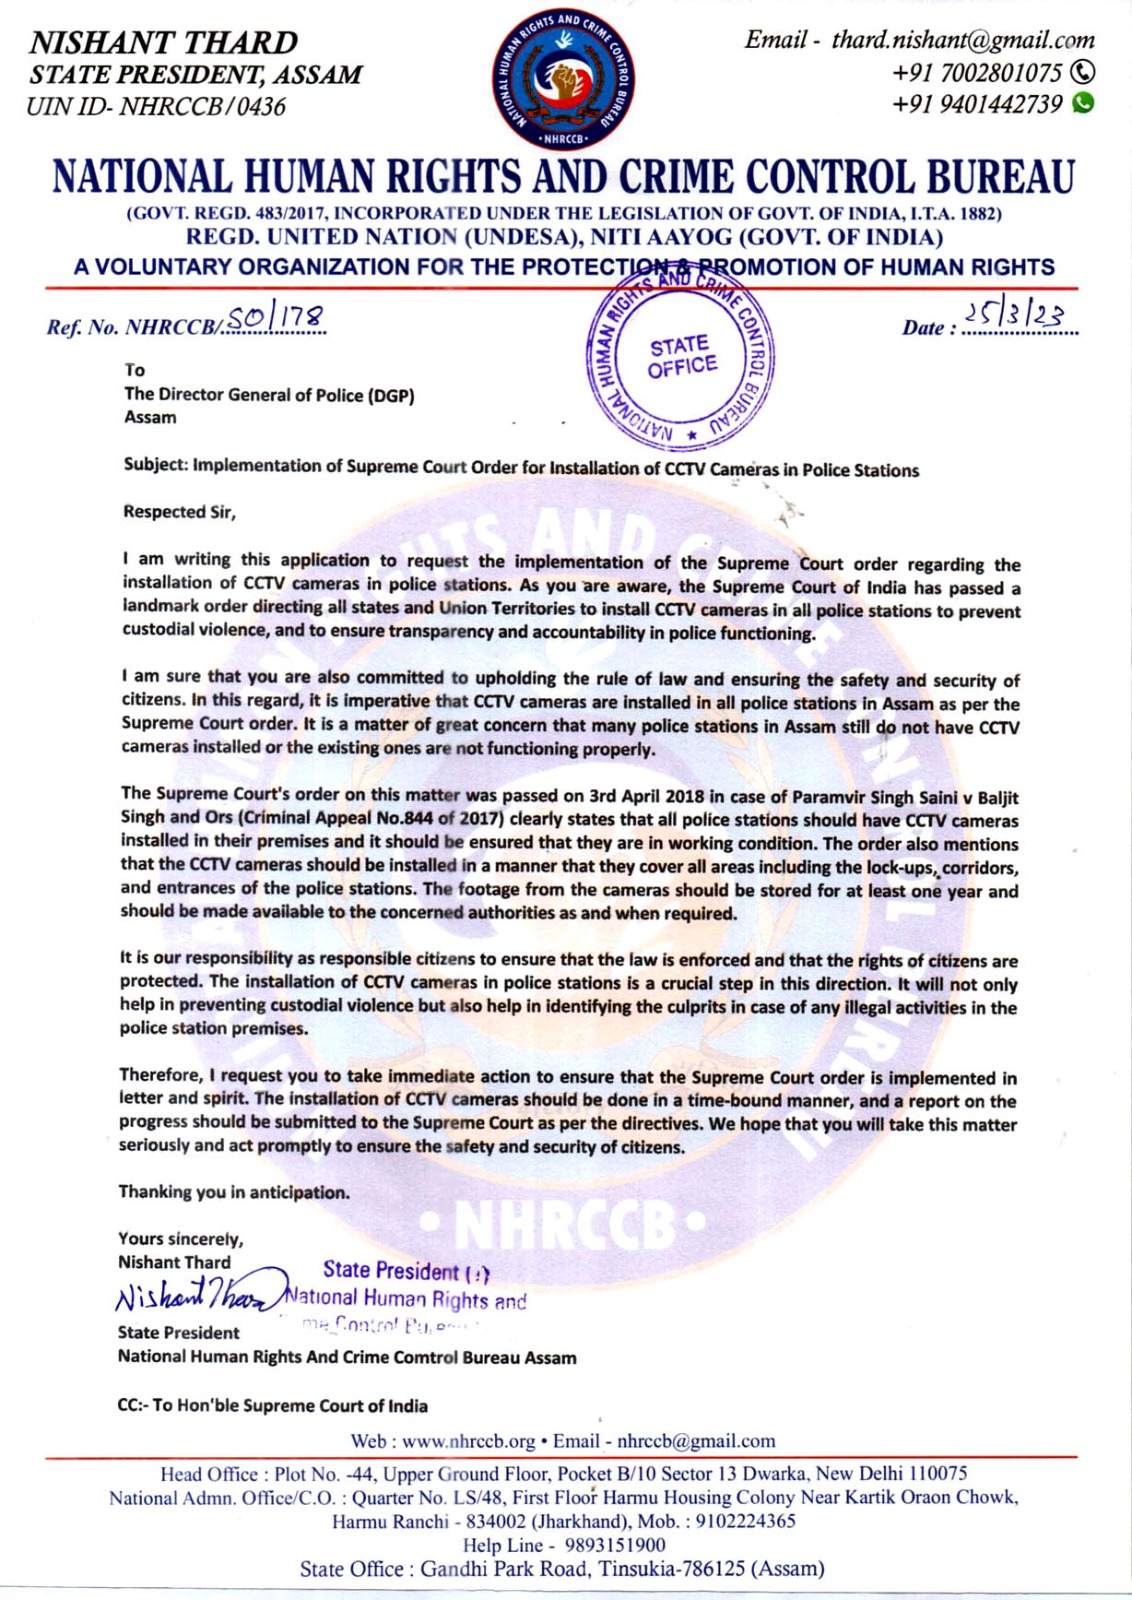 NHRCCB letter to DGP Assam